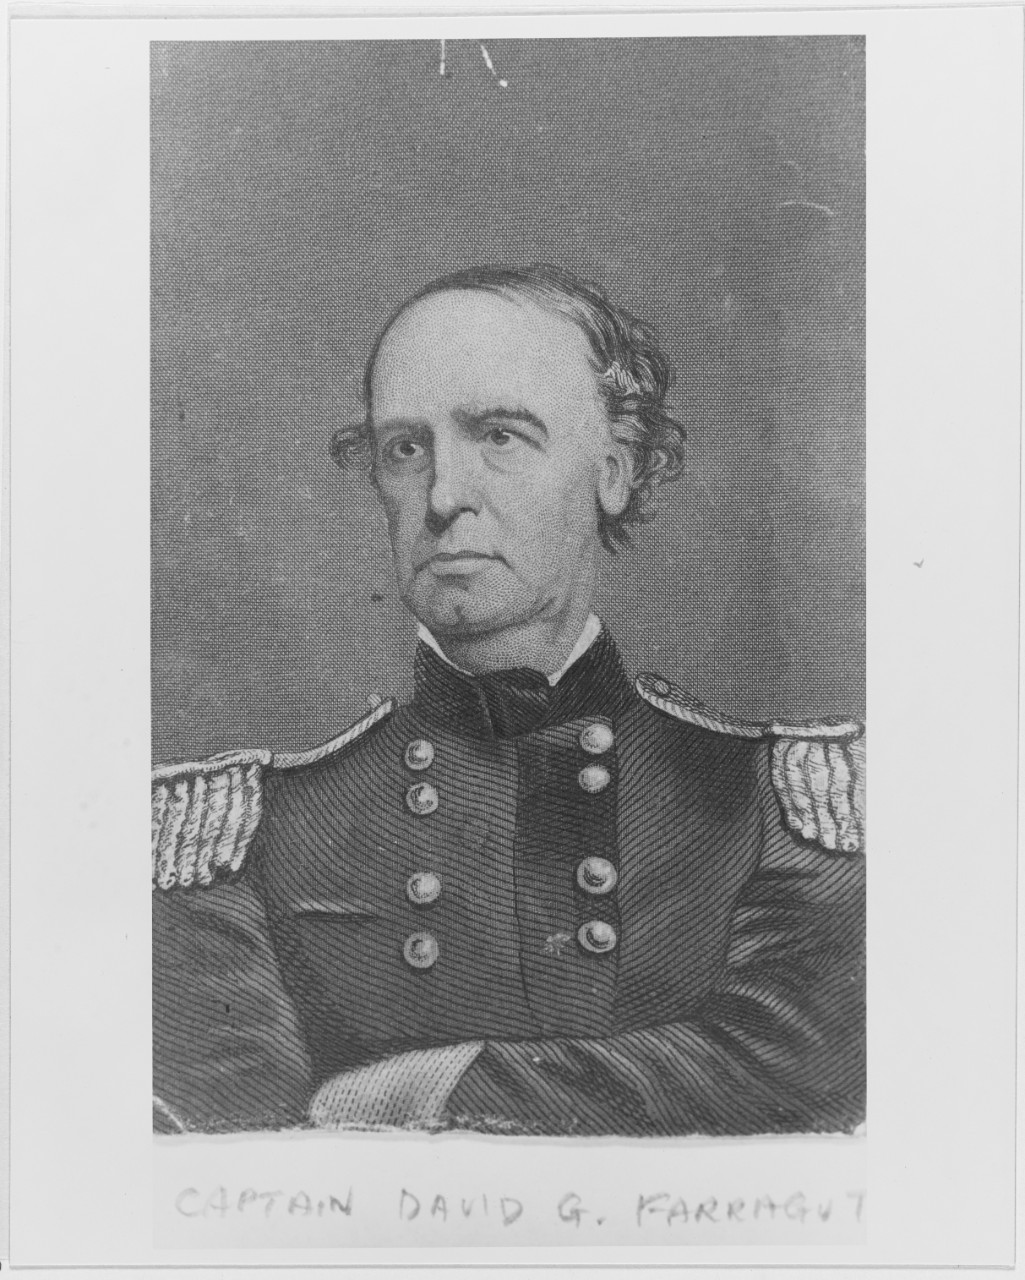 Captain David G. Farragut, USN